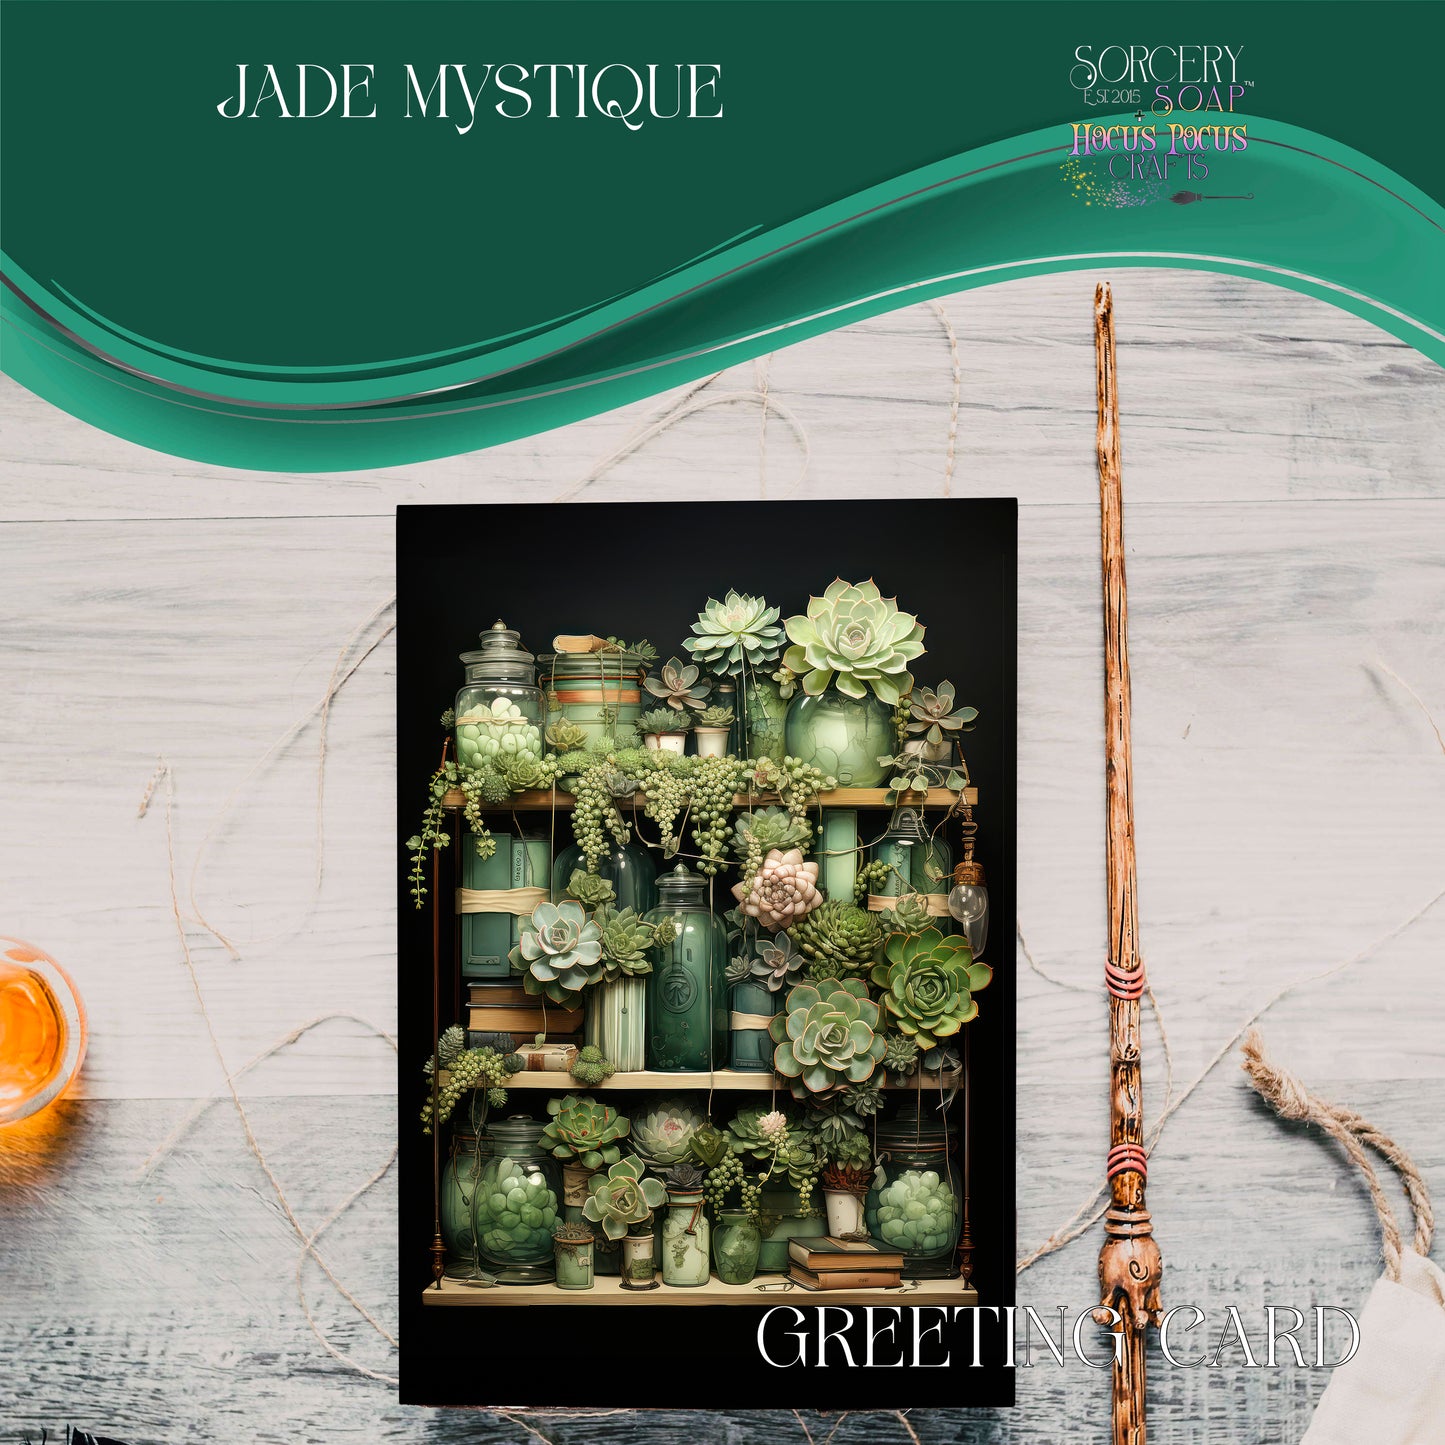 Jade Sculpture 2 : Greeting Cards